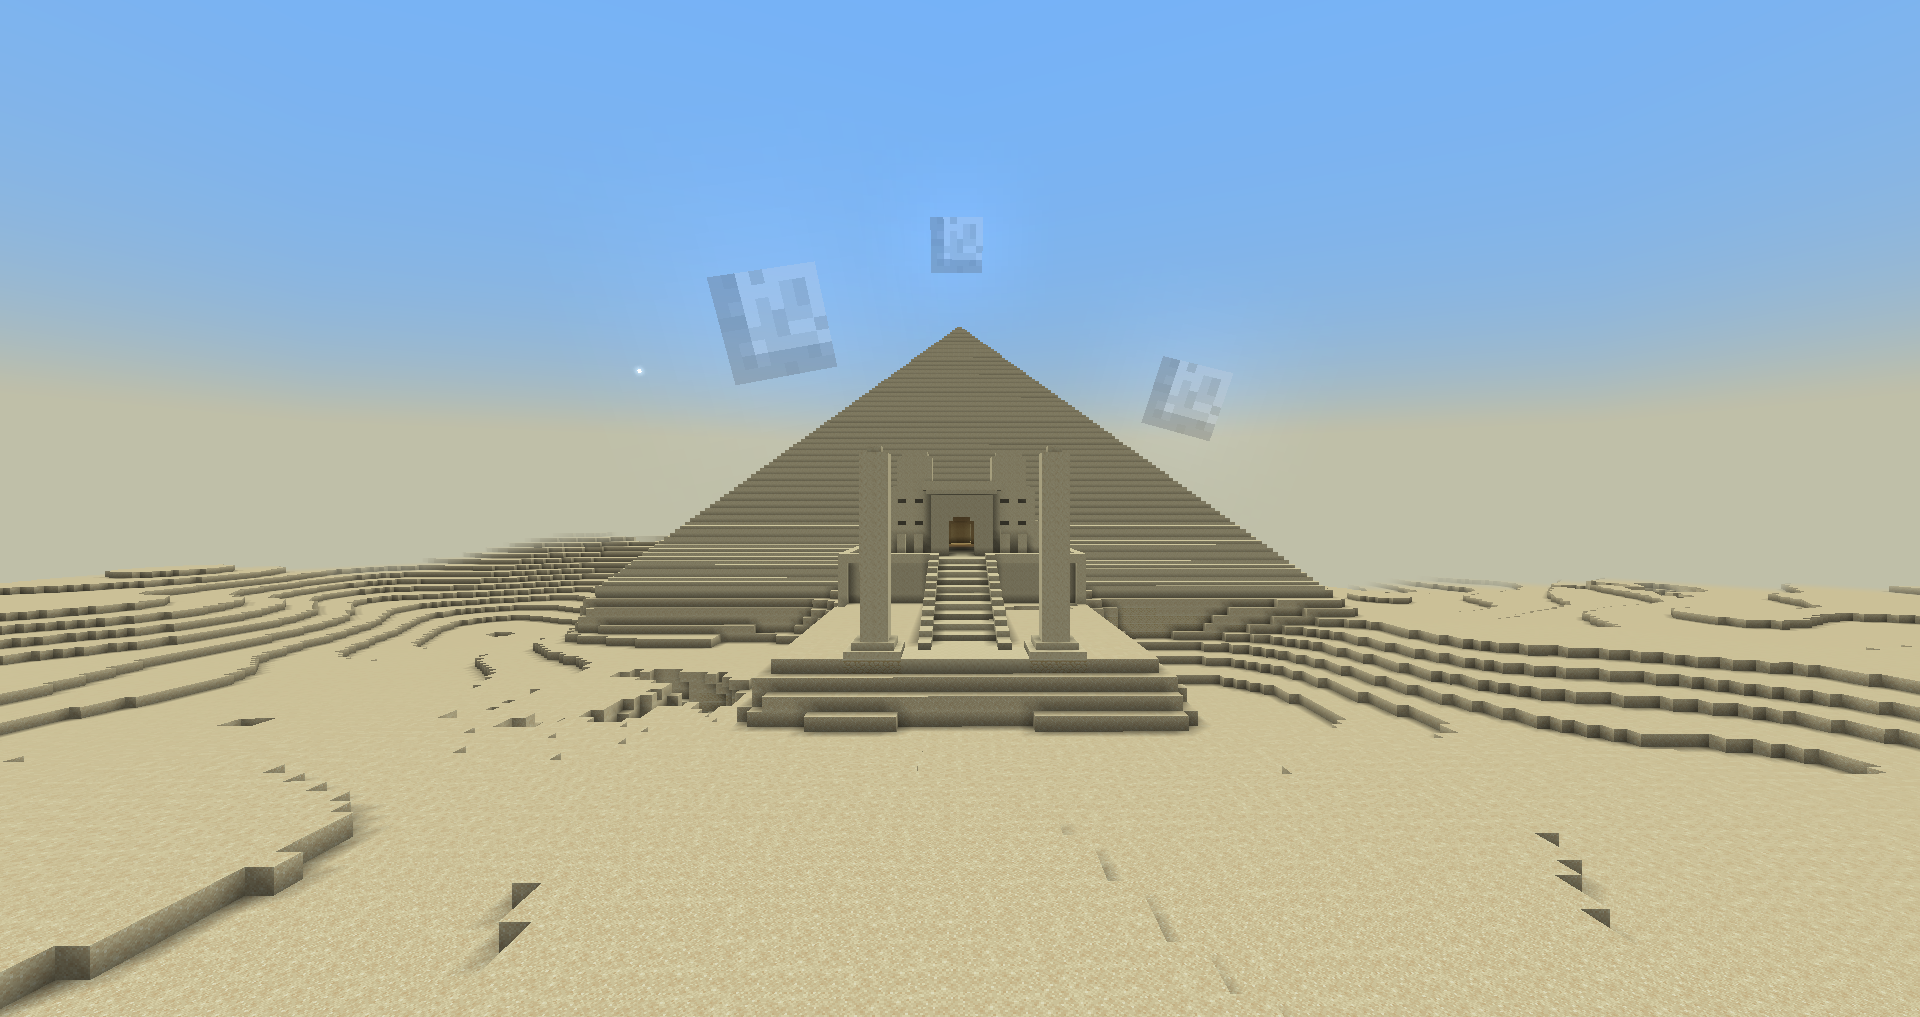 The Abydos Pyramid and the three moons of Abydos: Edfu, Dja'Net and Nuturo